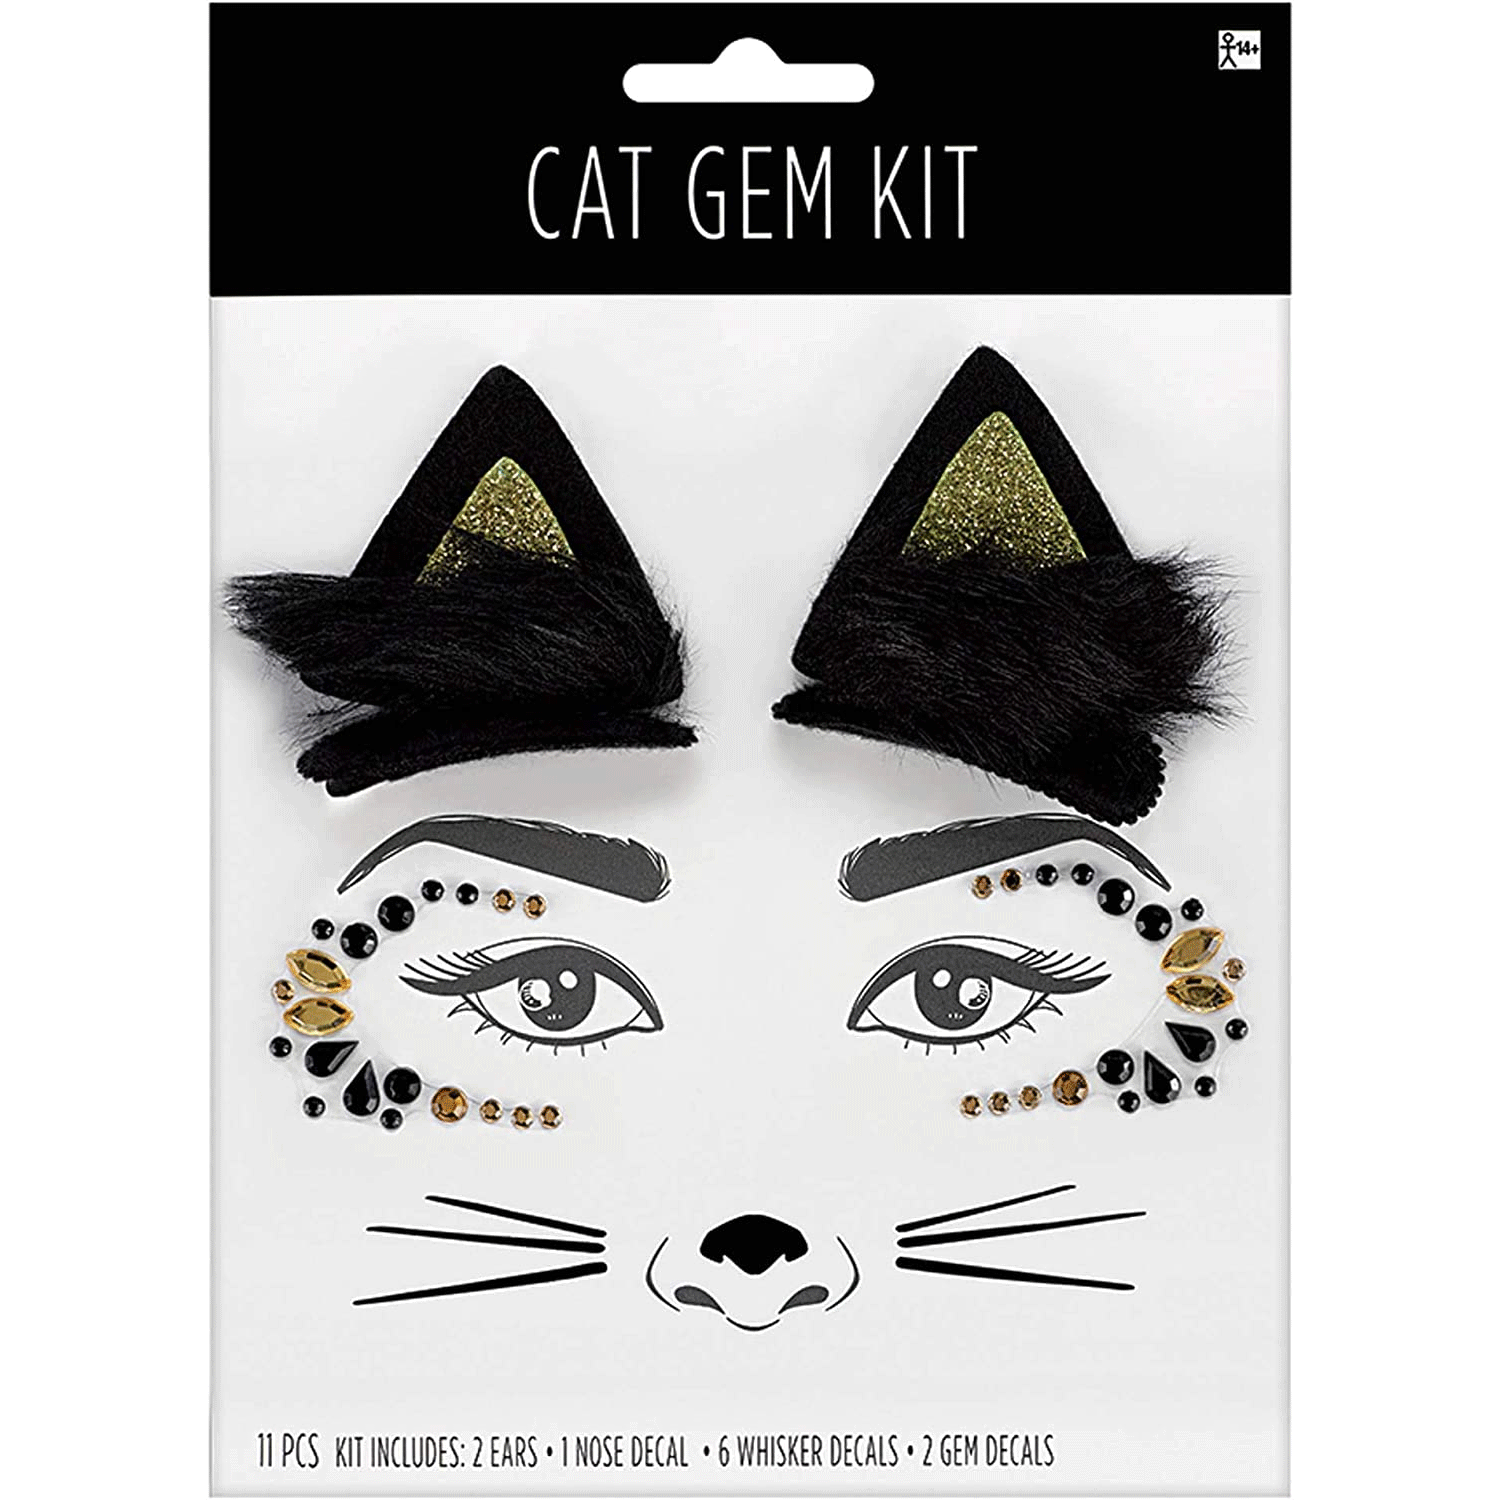 Cat Gem Kit With Ears